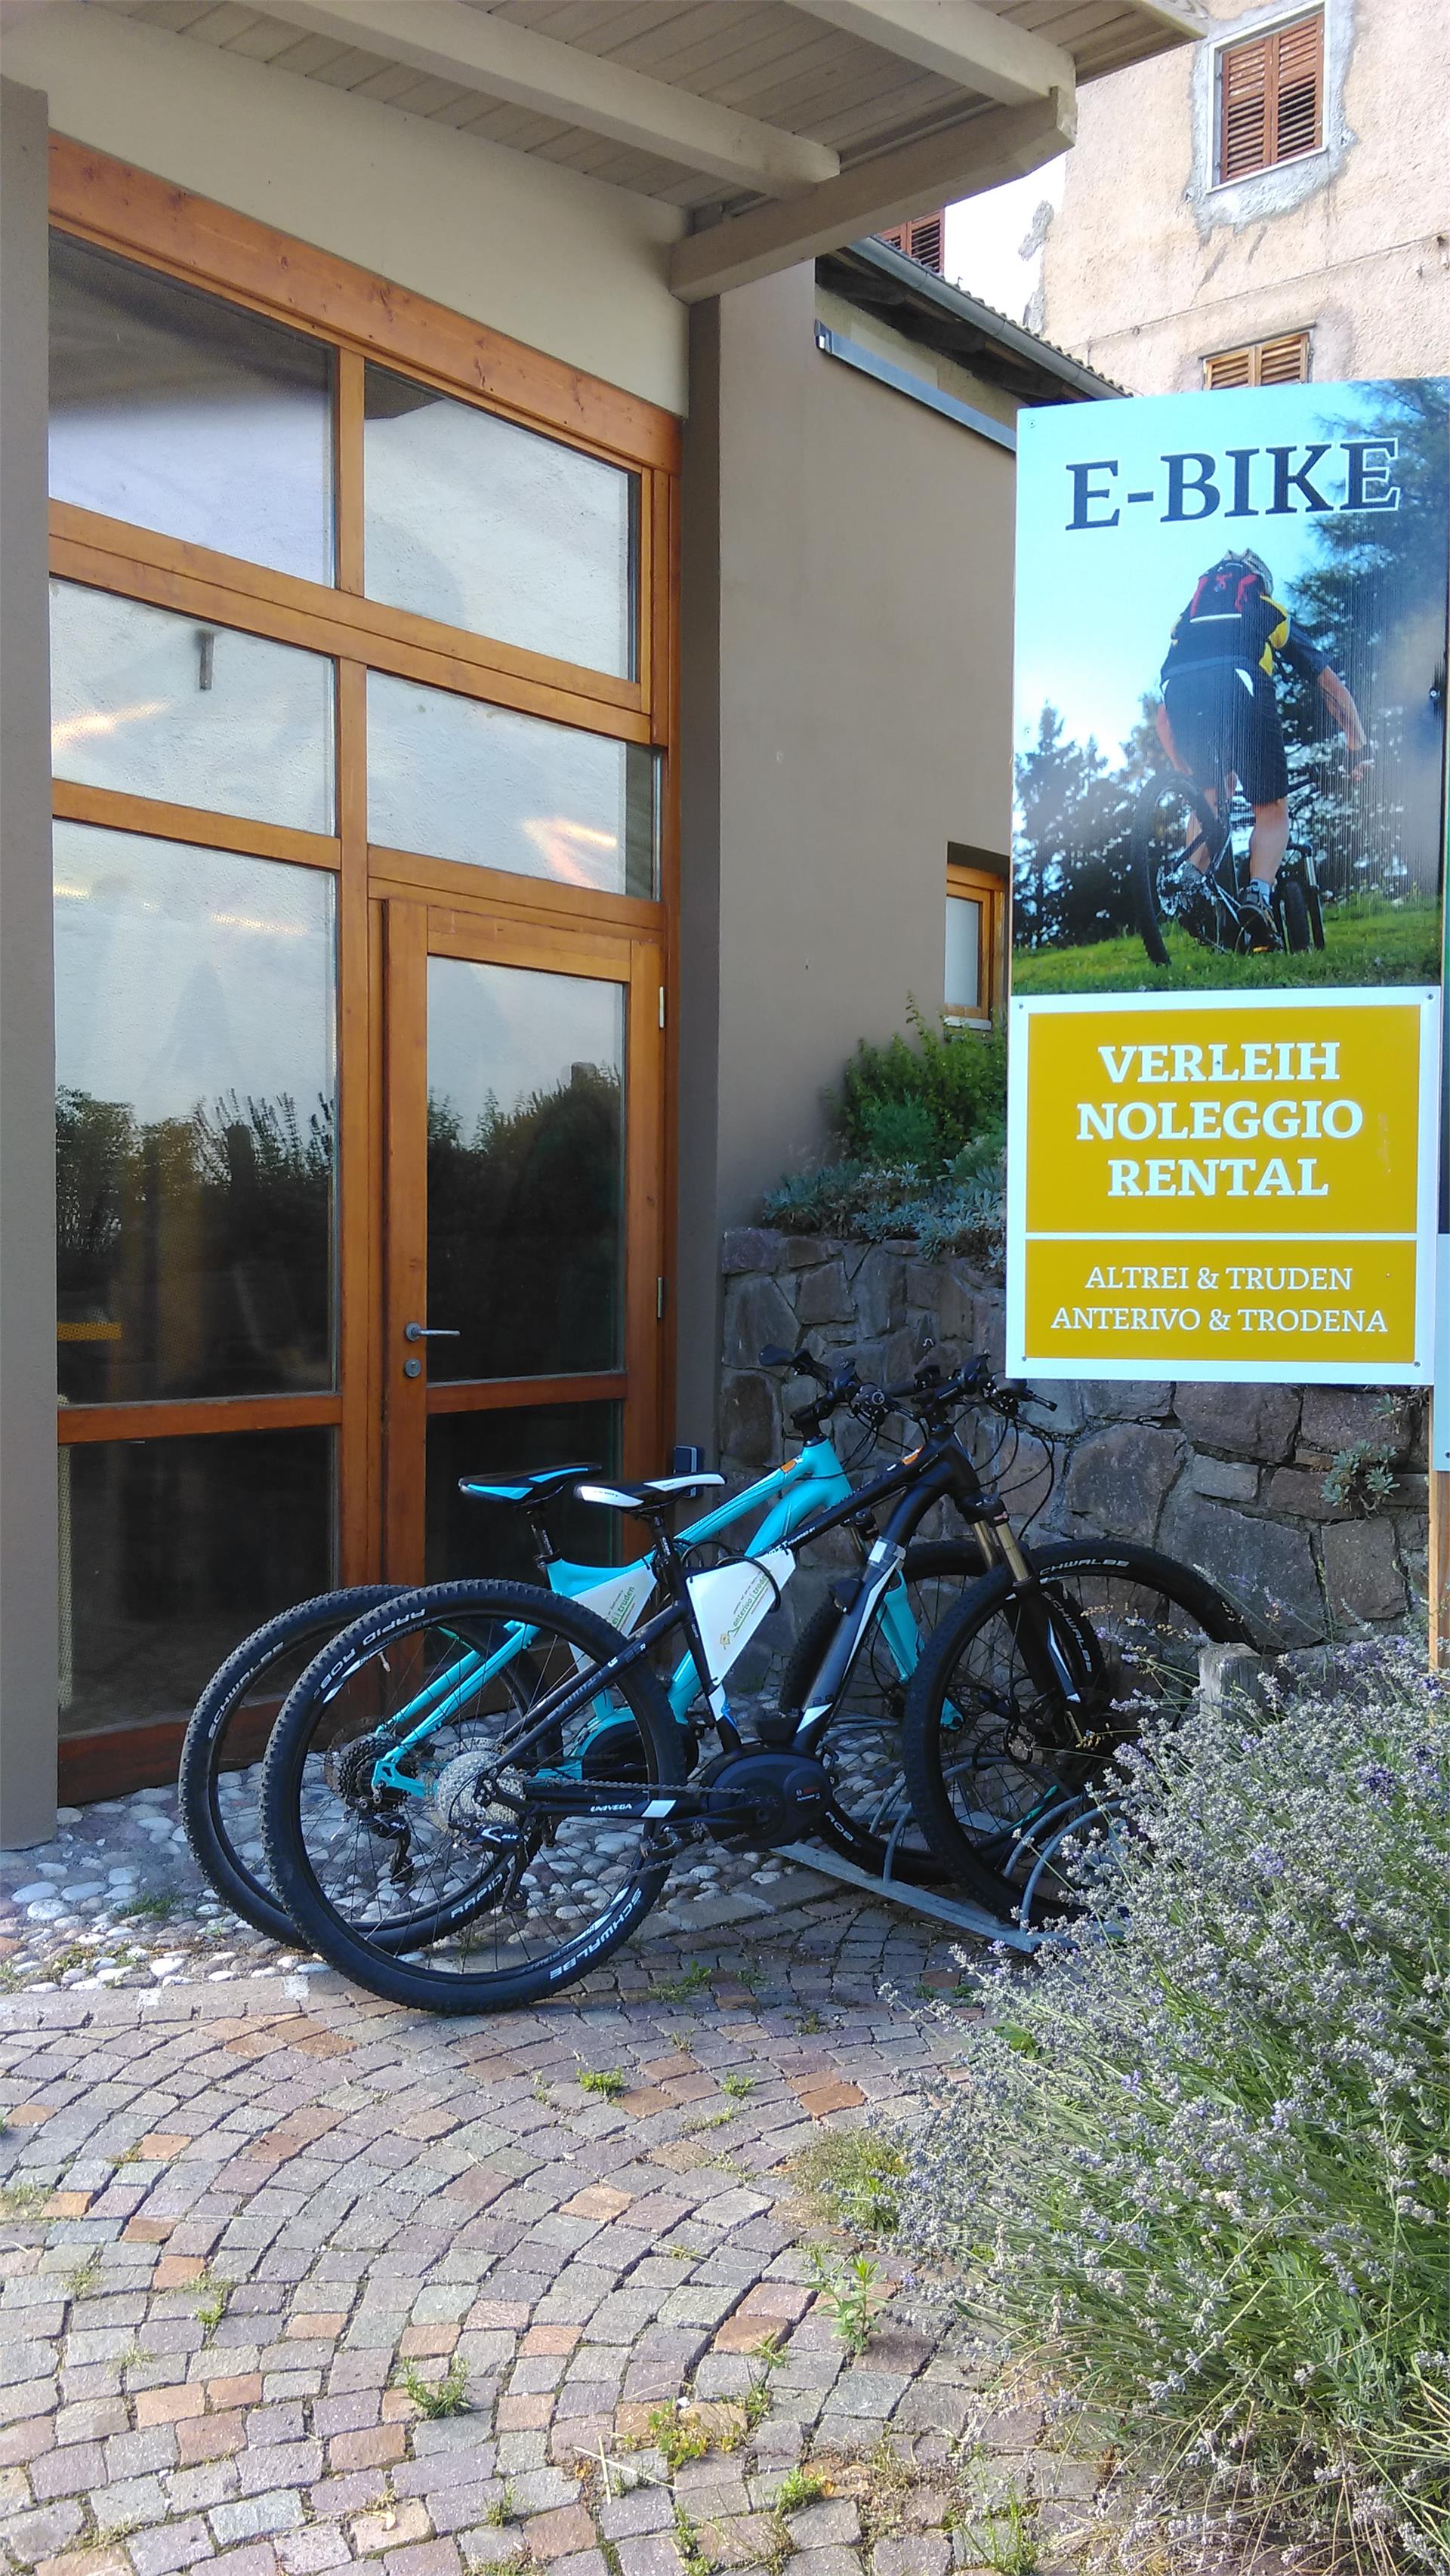 Noleggio E-Bike a Trodena e Anterivo